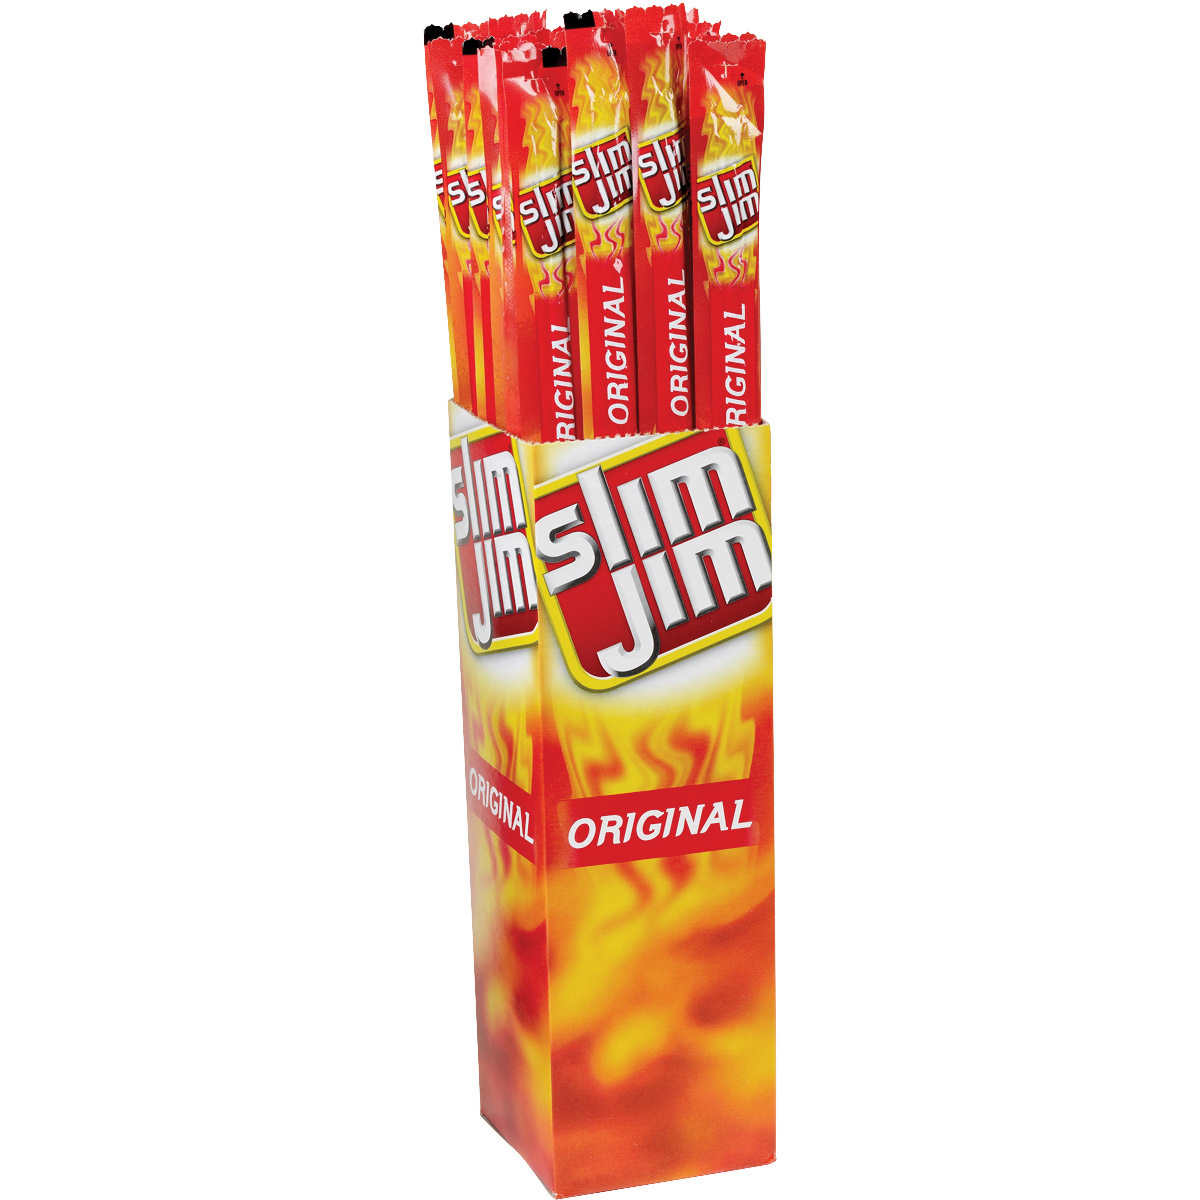 Slim Jim Smoked Snack Stick, Original, 0.97 oz, 24-count